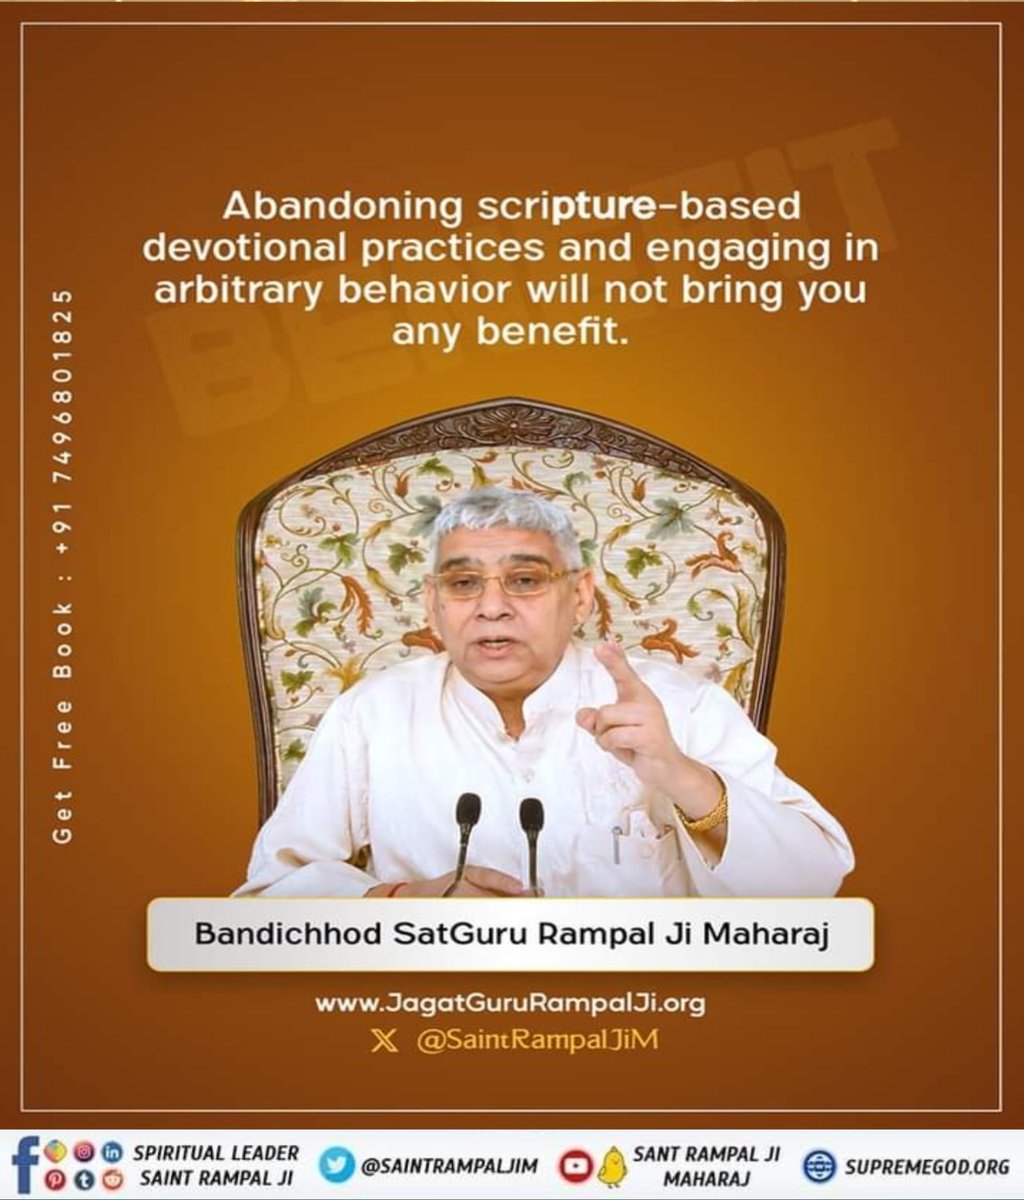 #GodMorningSaturday
🪴🪴
Abandoning scripture-based devotional practices and engaging in arbitrary behavior will not bring you any benefit.
🙇🙇
Bandichhod SatGuru Rampal Ji Maharaj